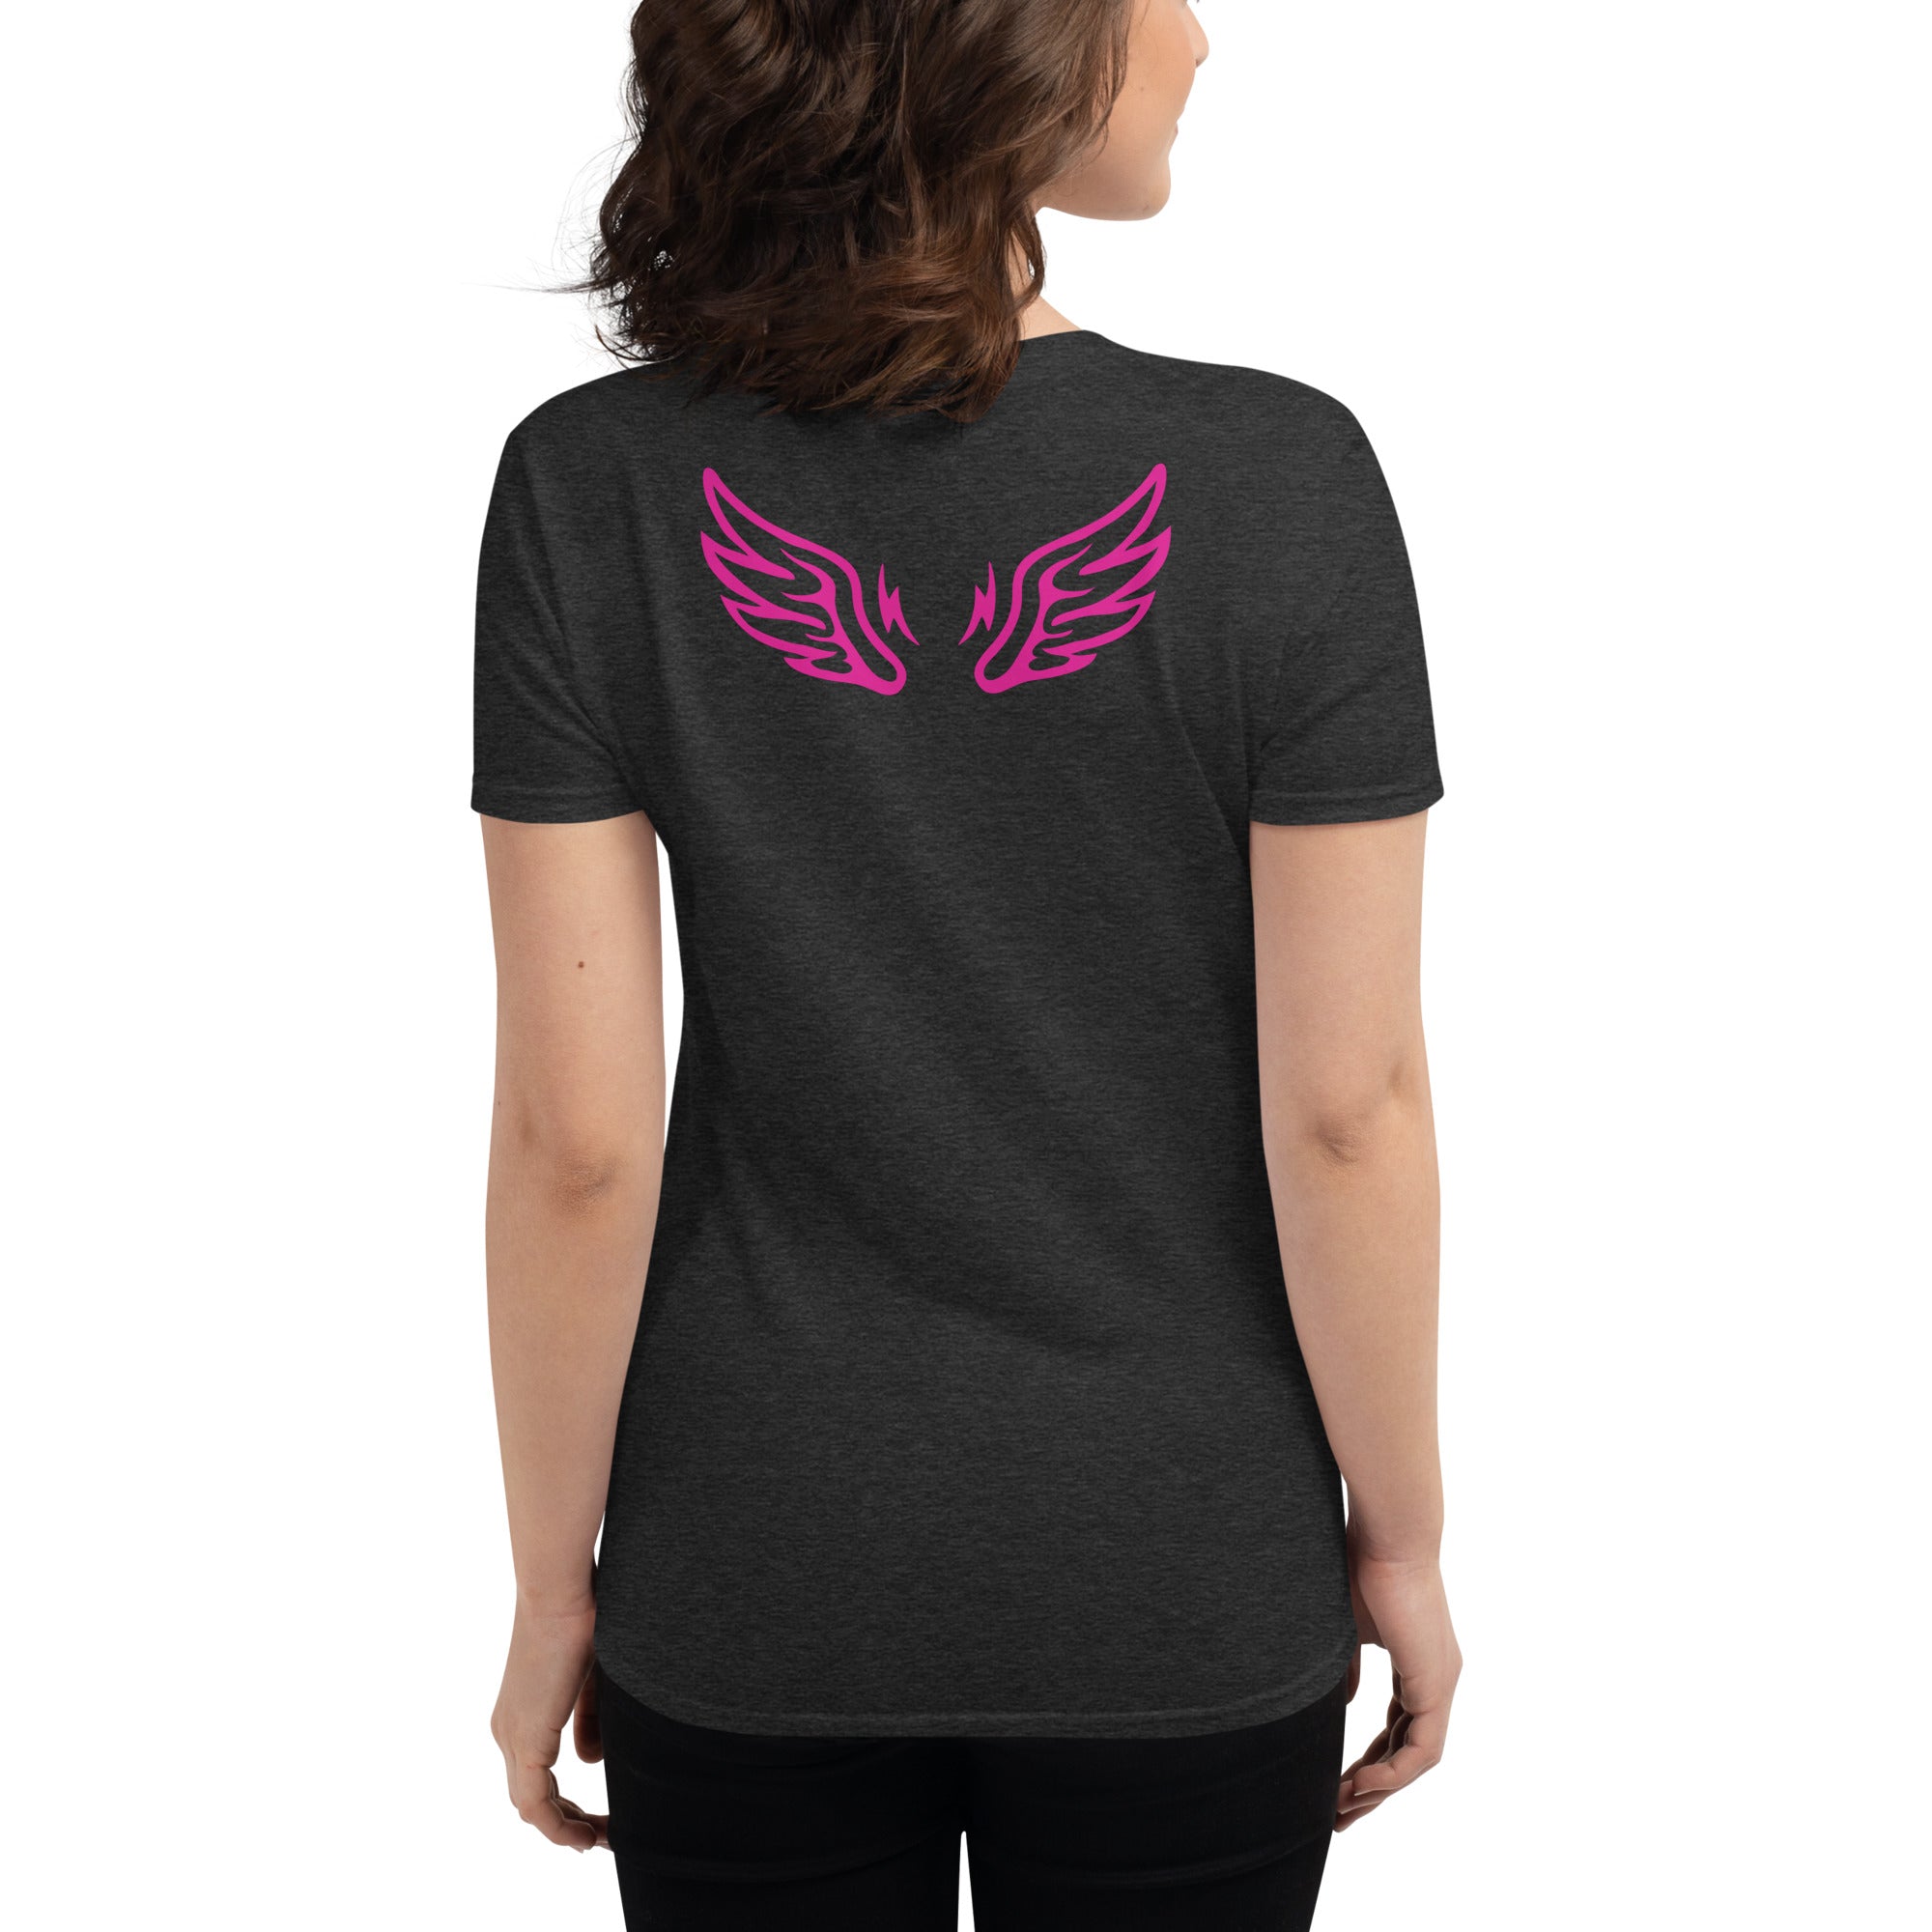 Voodoo Spirit Wings Women's short sleeve t-shirt